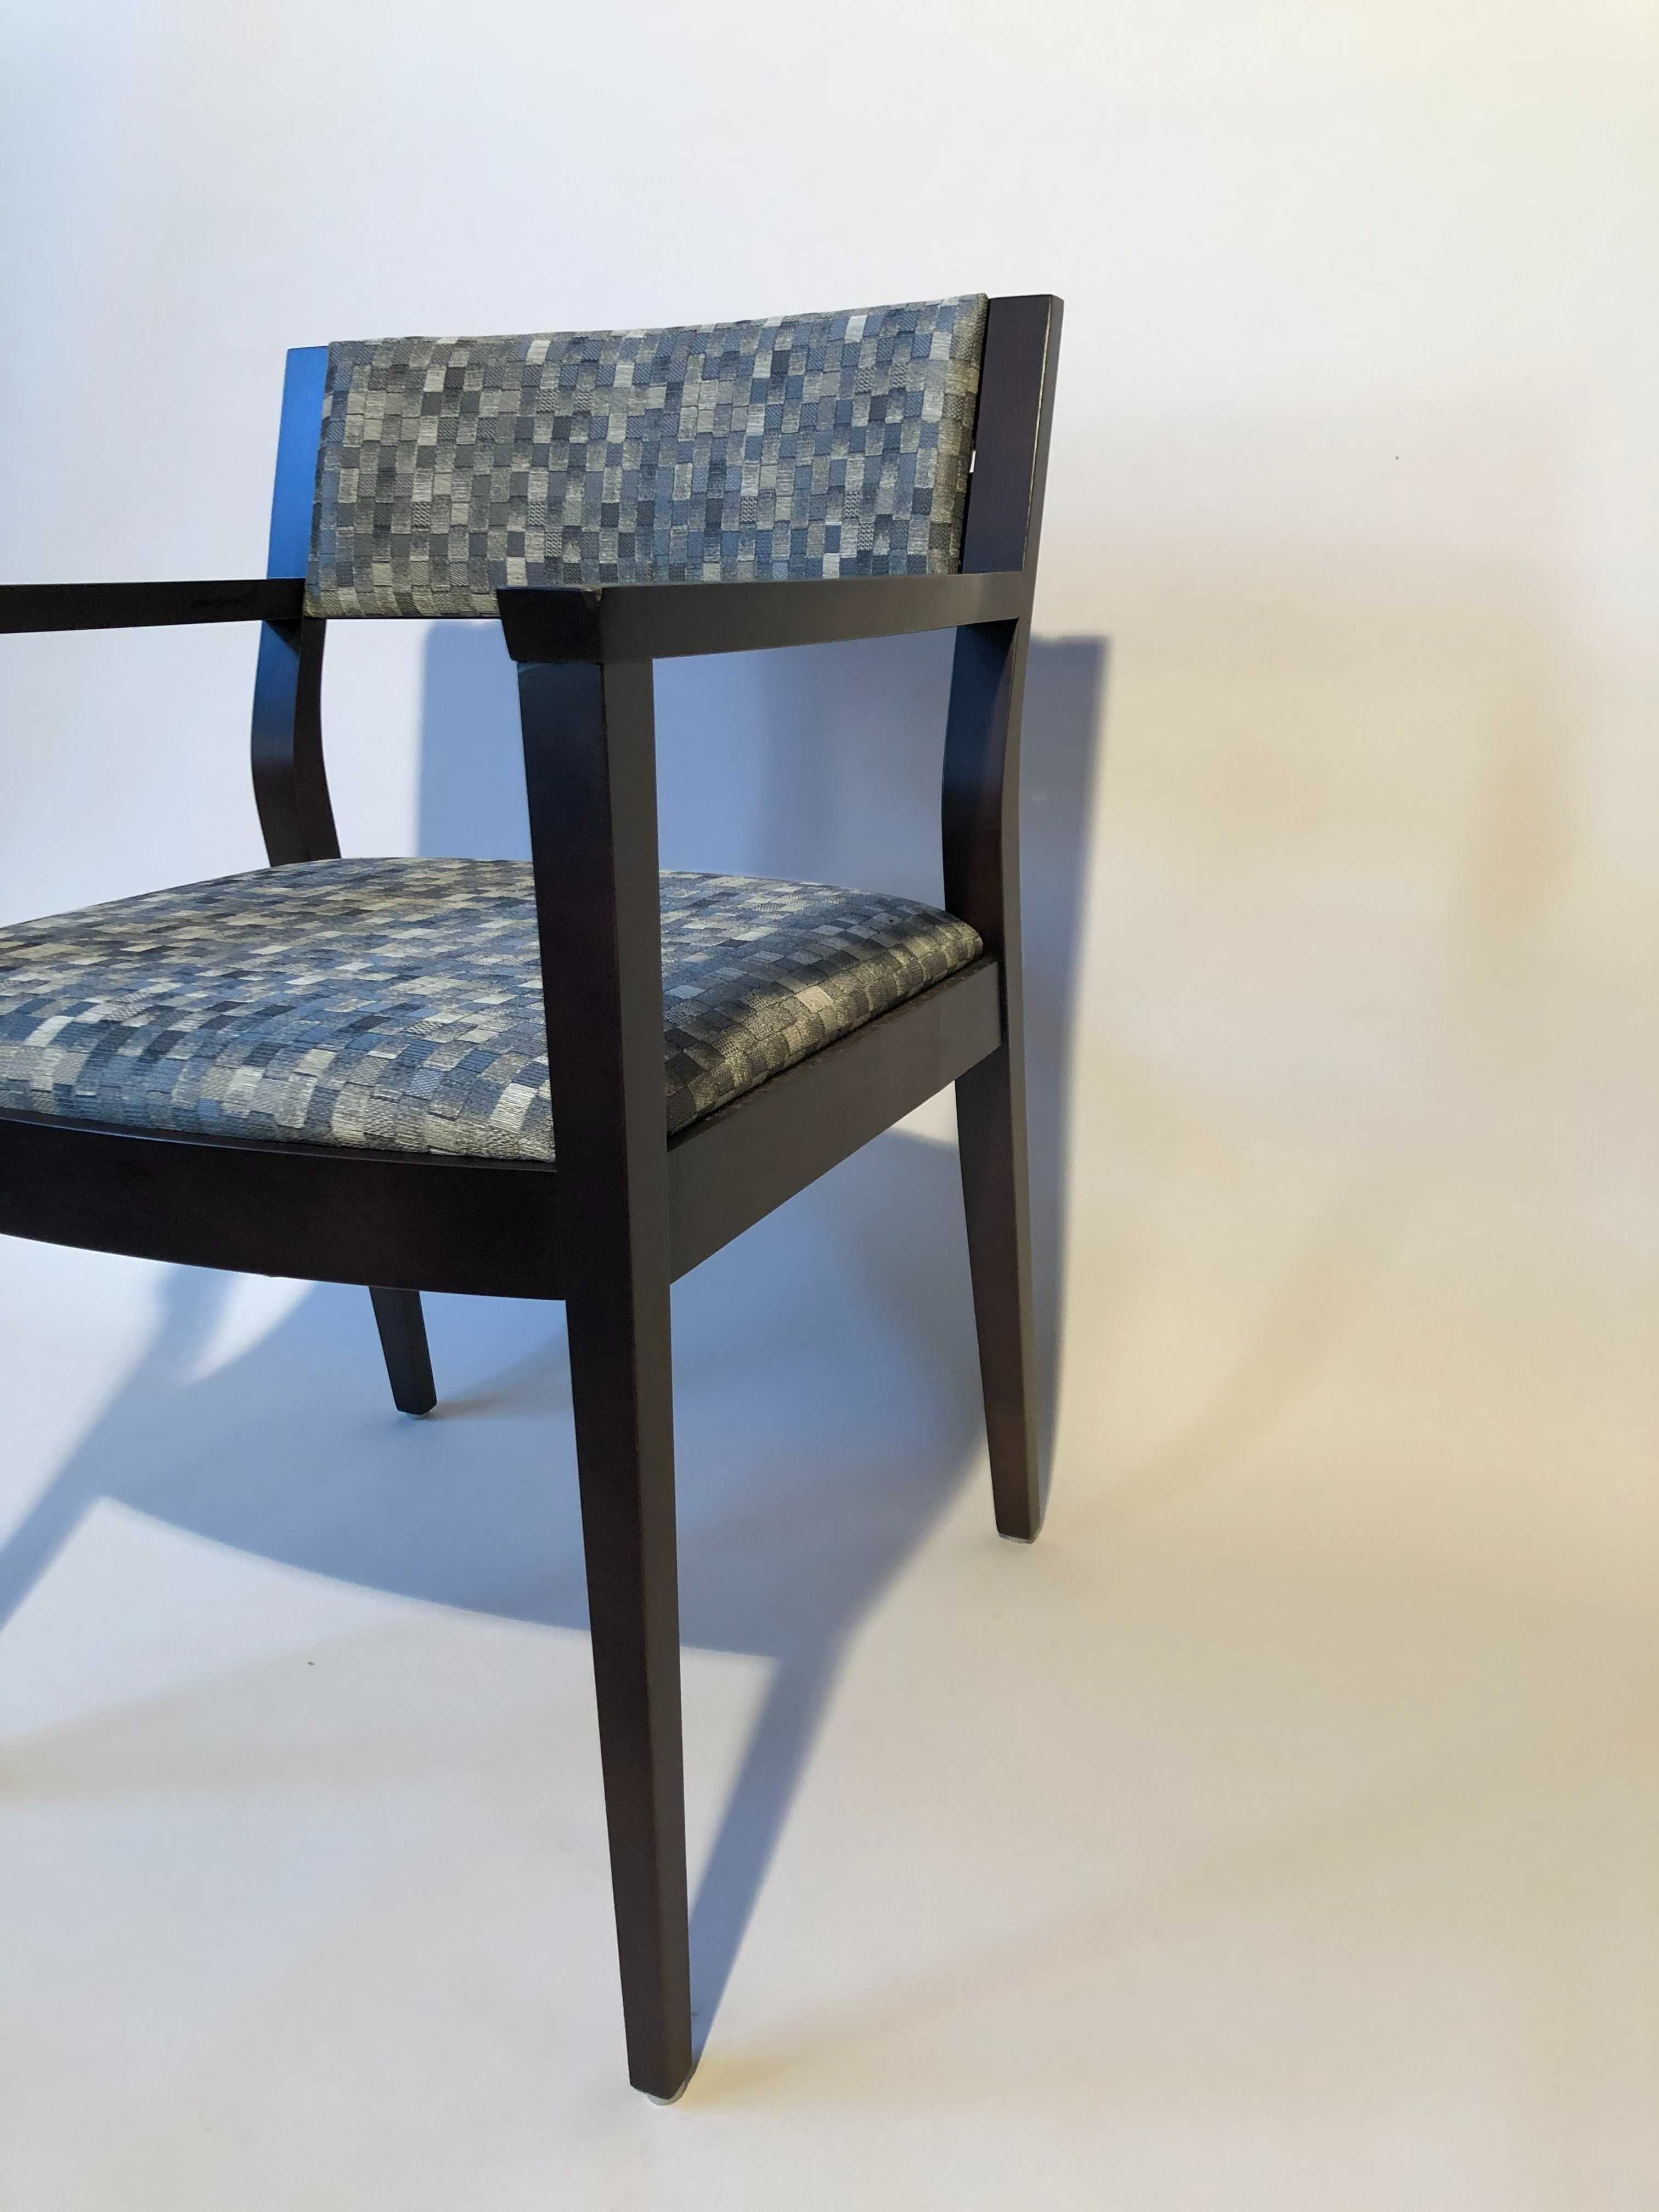 Krzeslo by Hickory Business Furniture (HBF) z North Carolina US